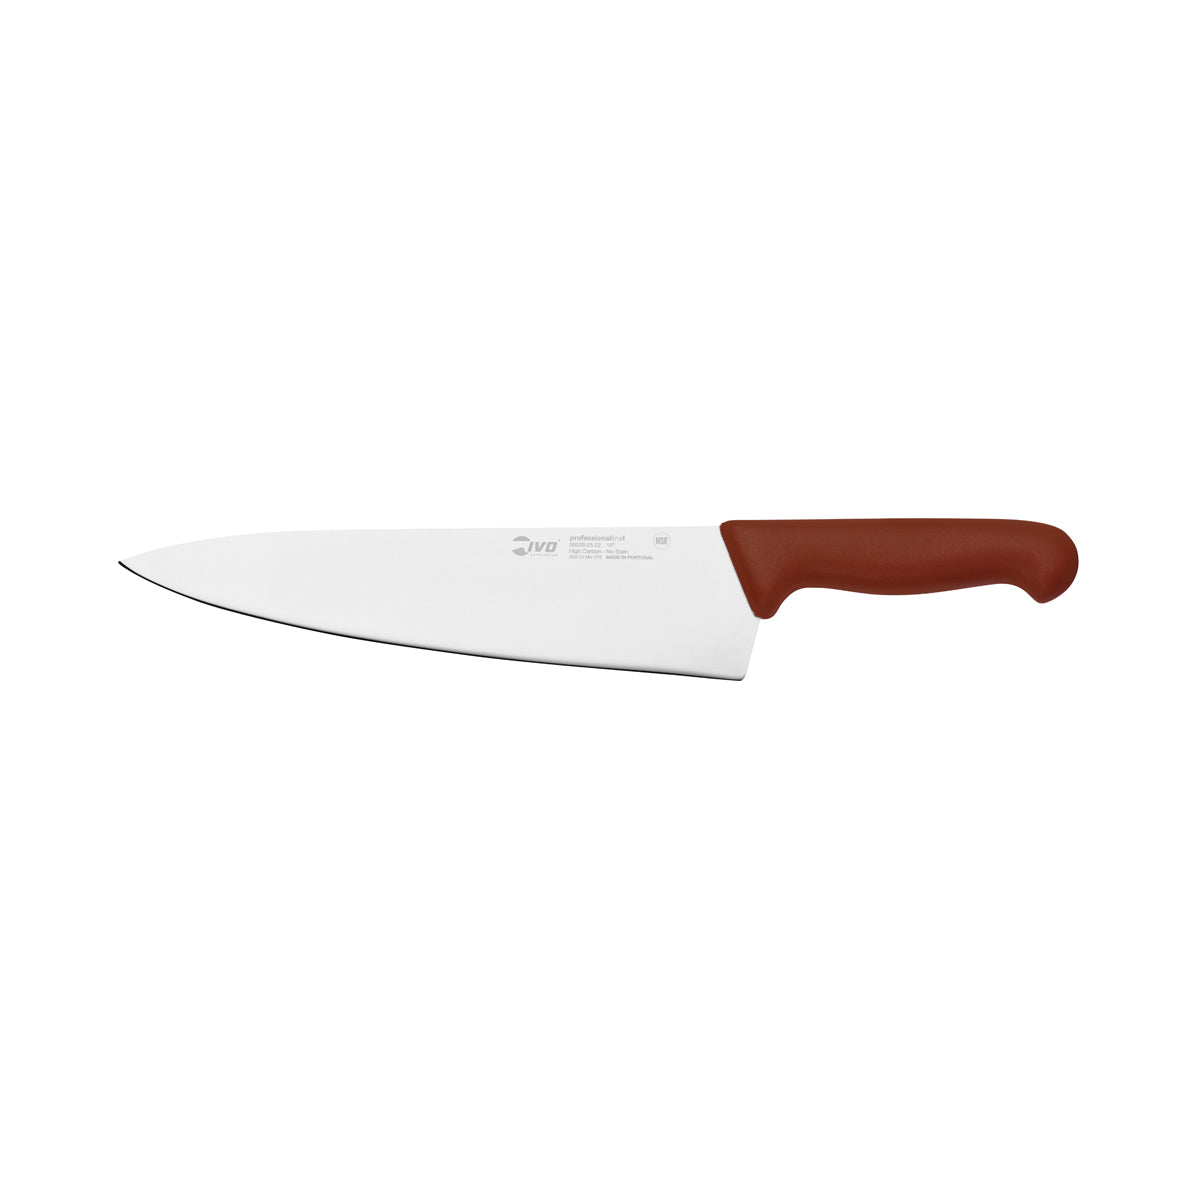 25429 Ivo Professional Line I Chefs Knife Brown 250mm Tomkin Australia Hospitality Supplies